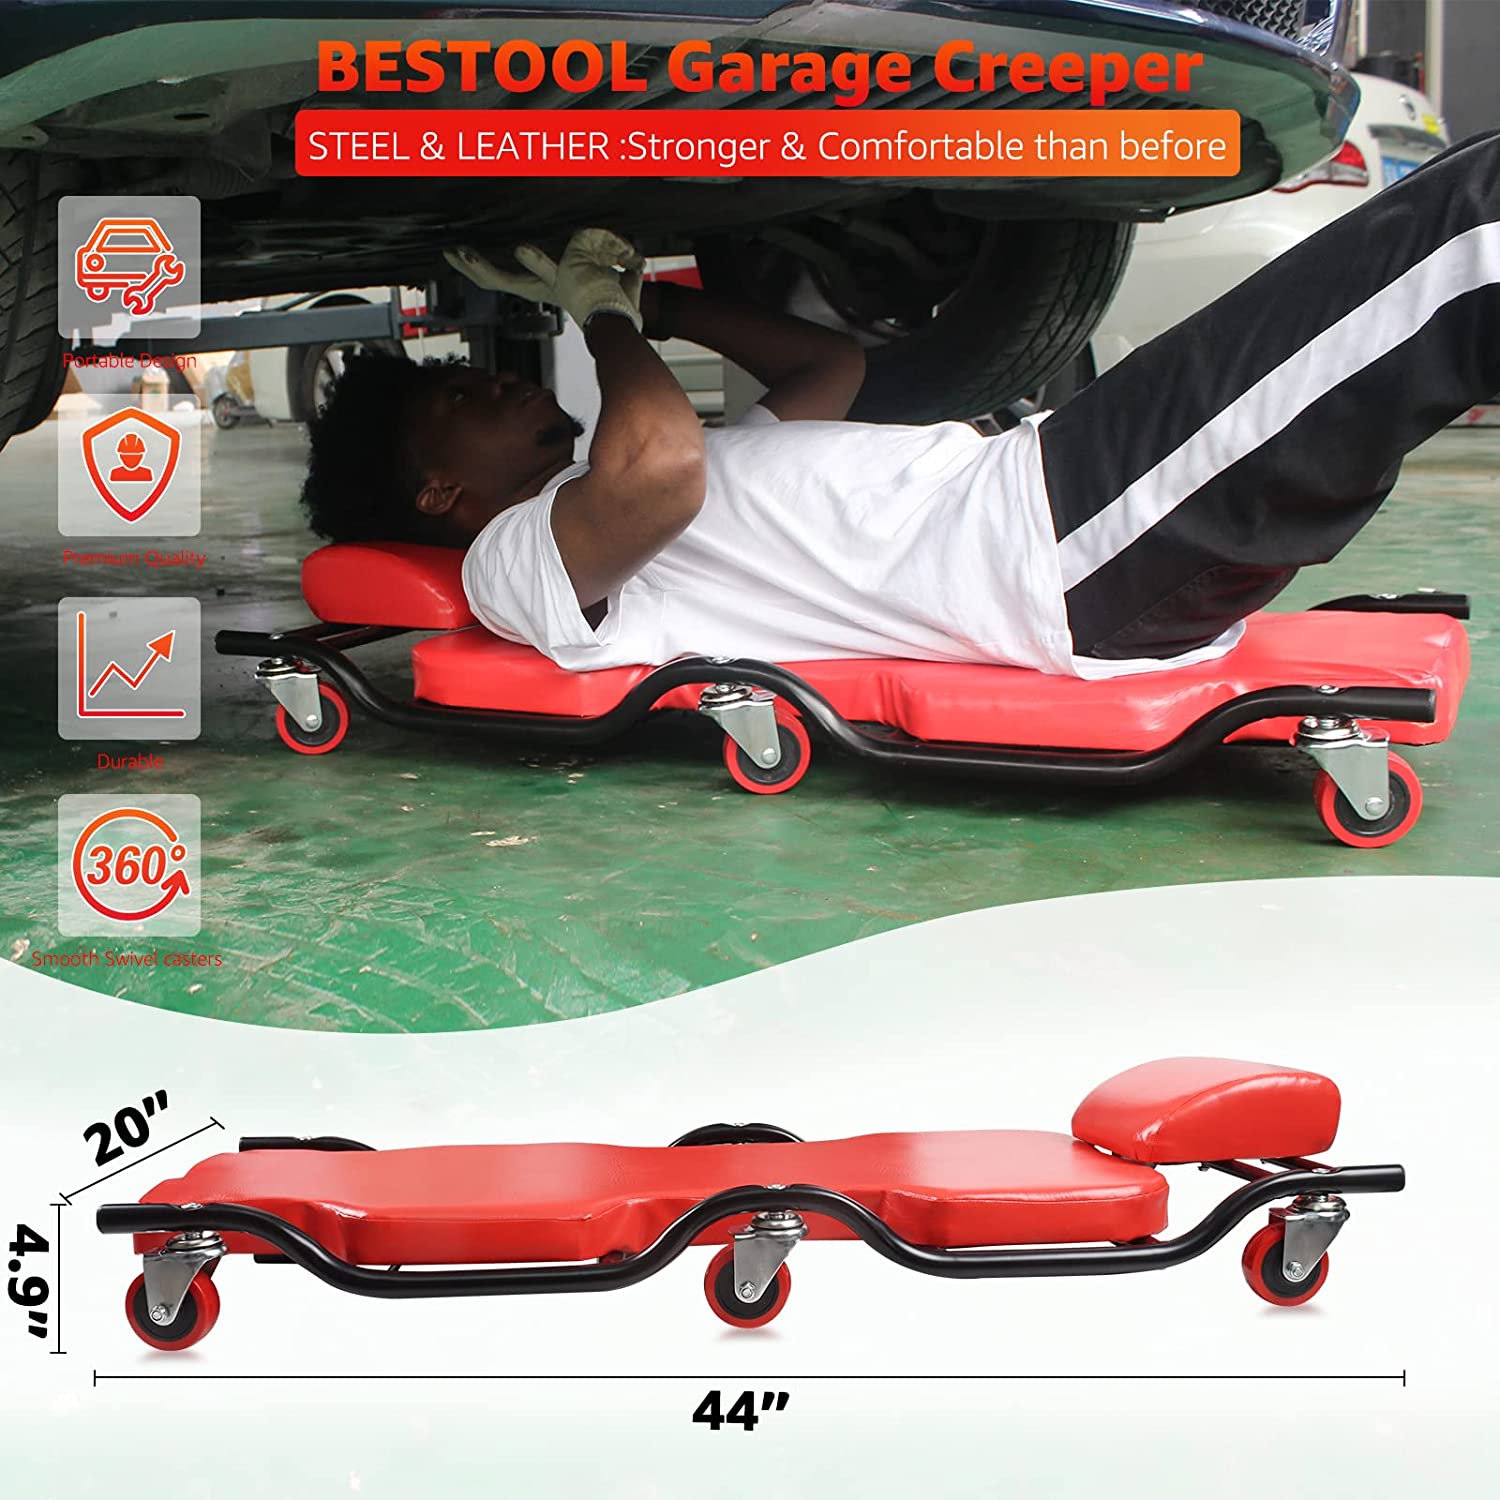 BESTOOL Heavy-Duty Automotive Creeper | Metal Frame Mechanic Creeper | 350LBs Capacity, Red